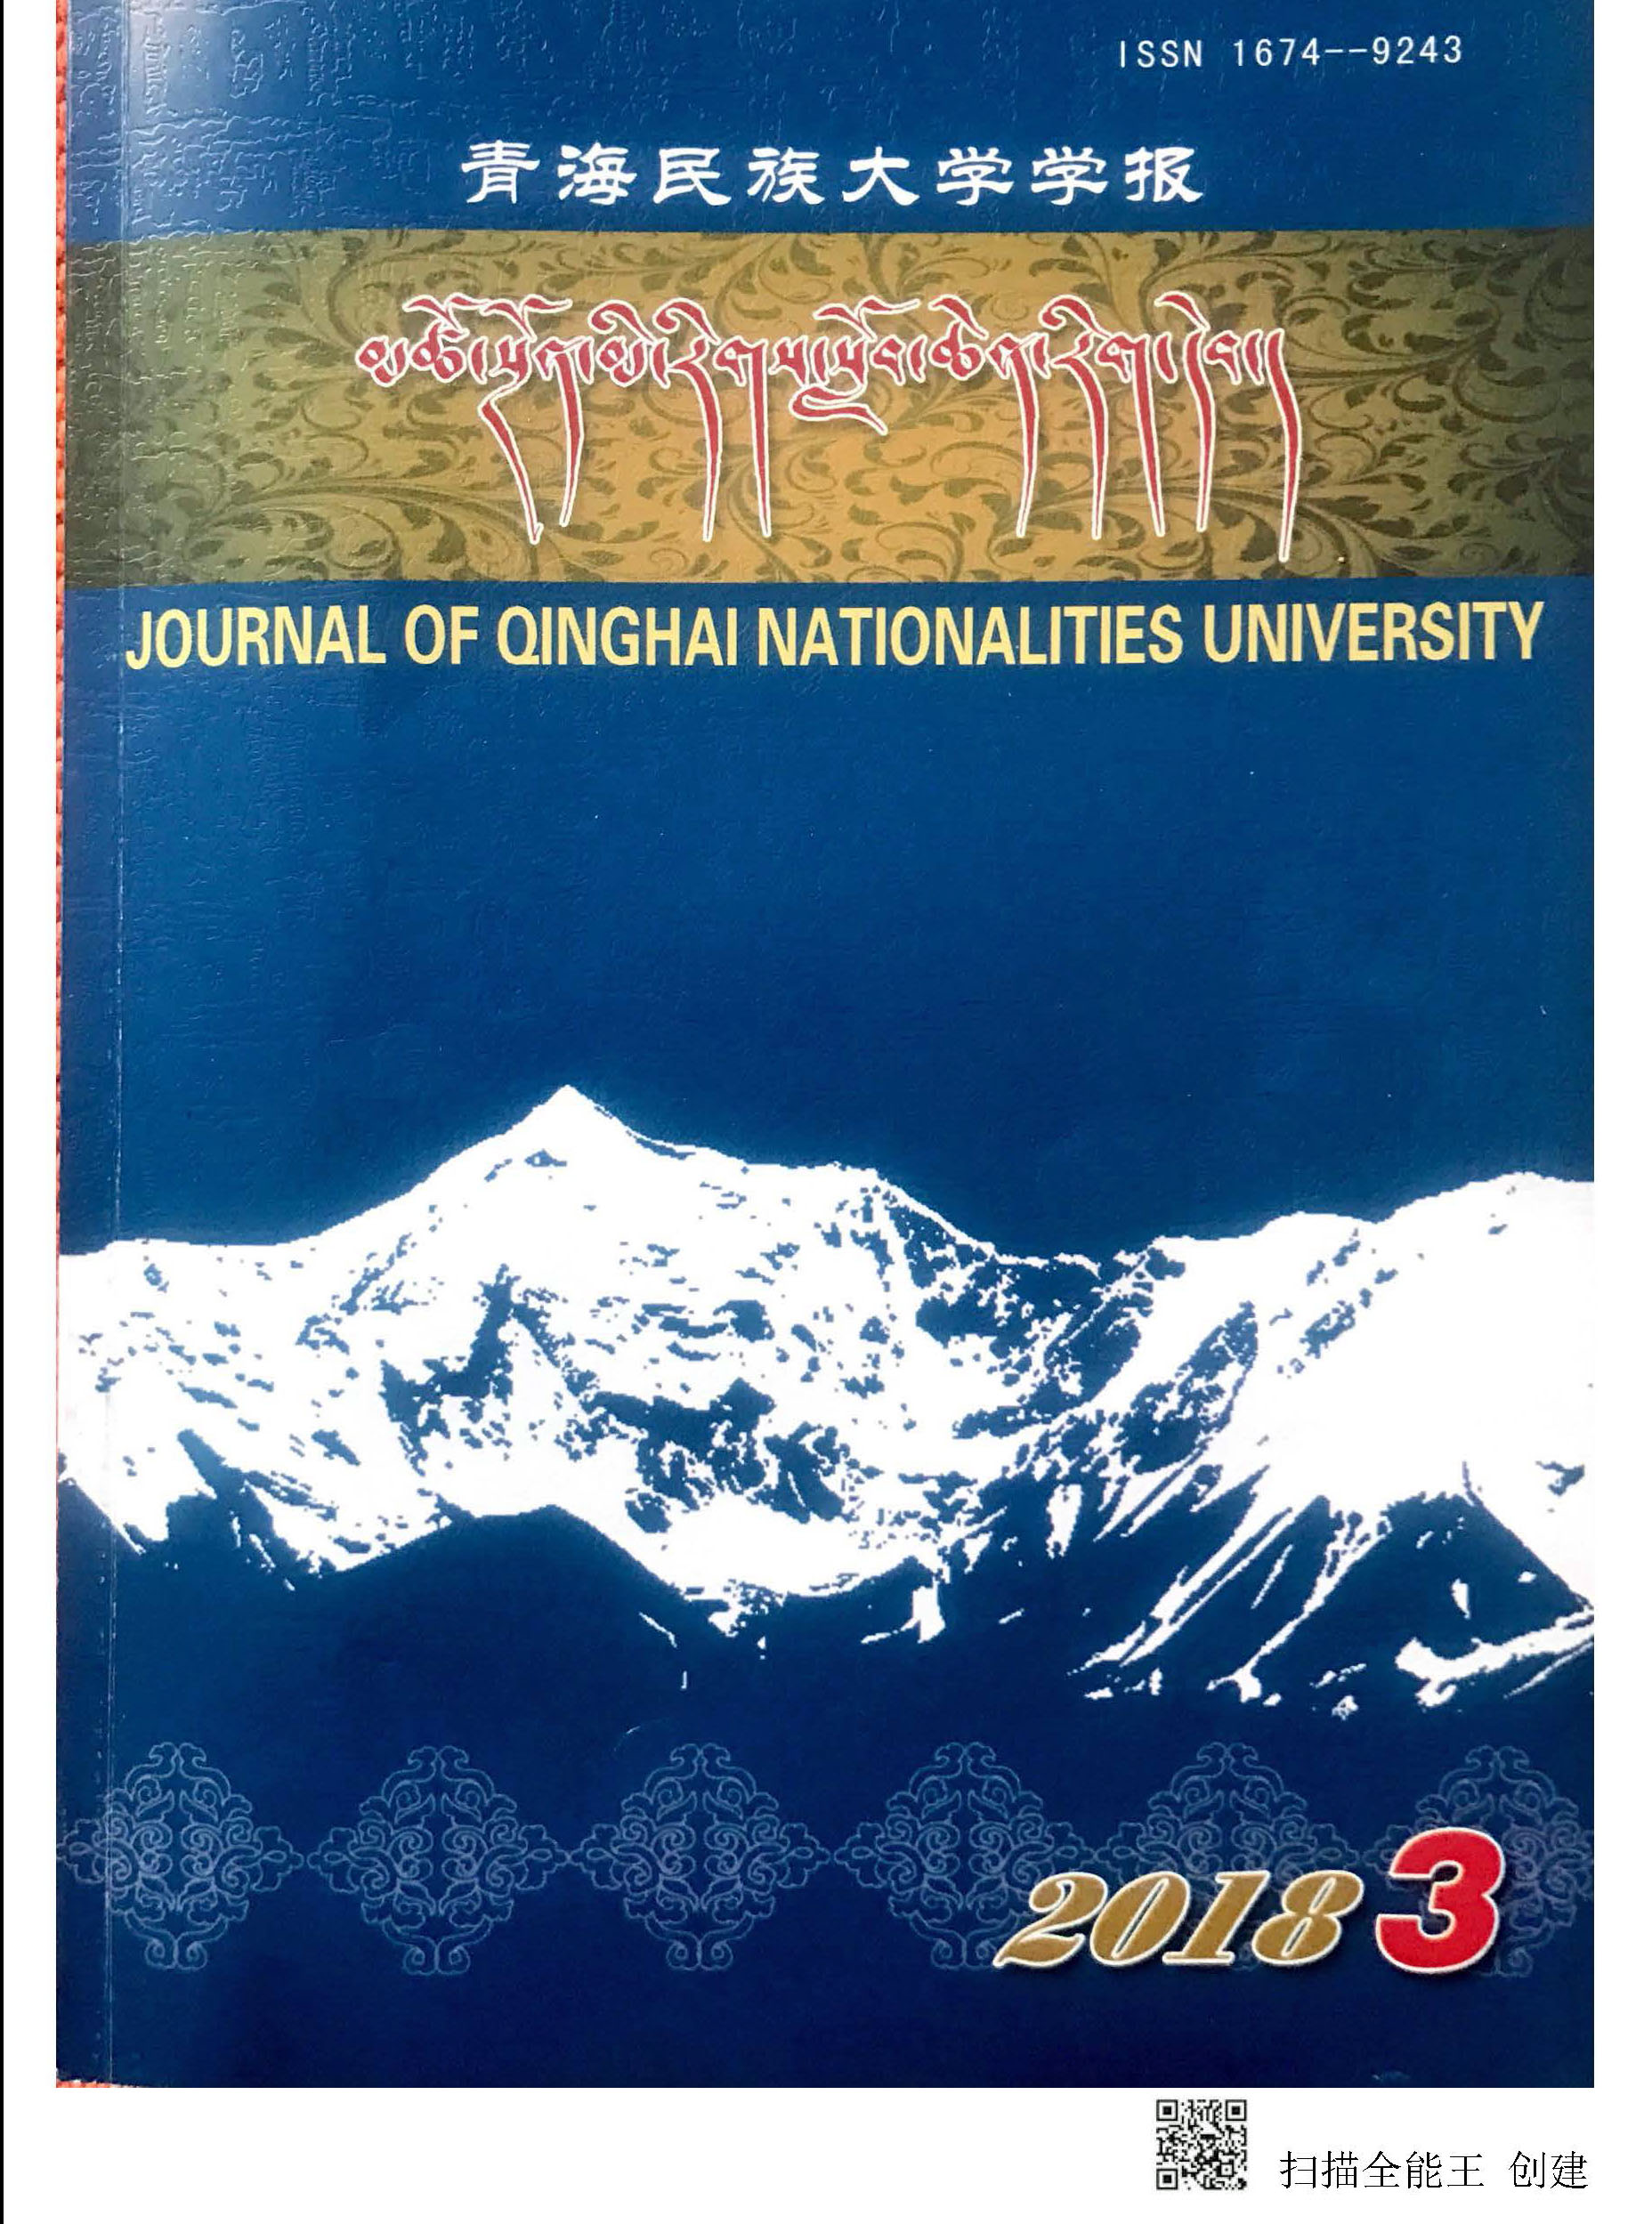 Journal of Qinghai Nationalities University, Vol. 2018, No. 3